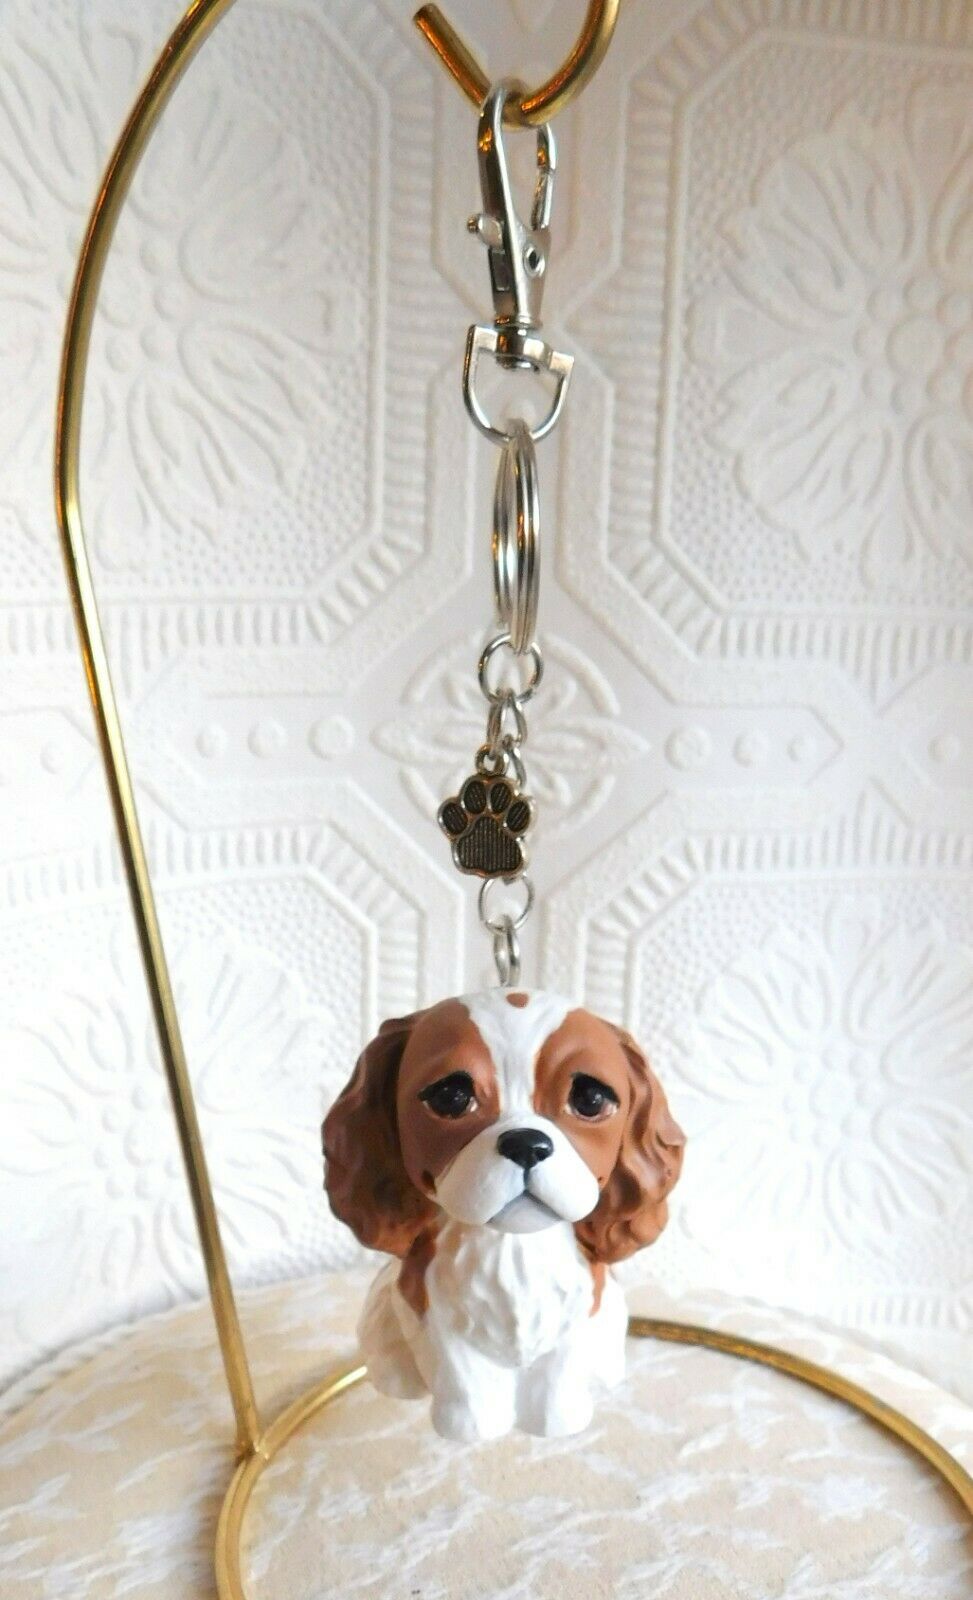 Cavalier King Charles pet memorial keychain - pet keepsake - dog key chain  - bag charm - pet loss - gift - cavalier jewelry